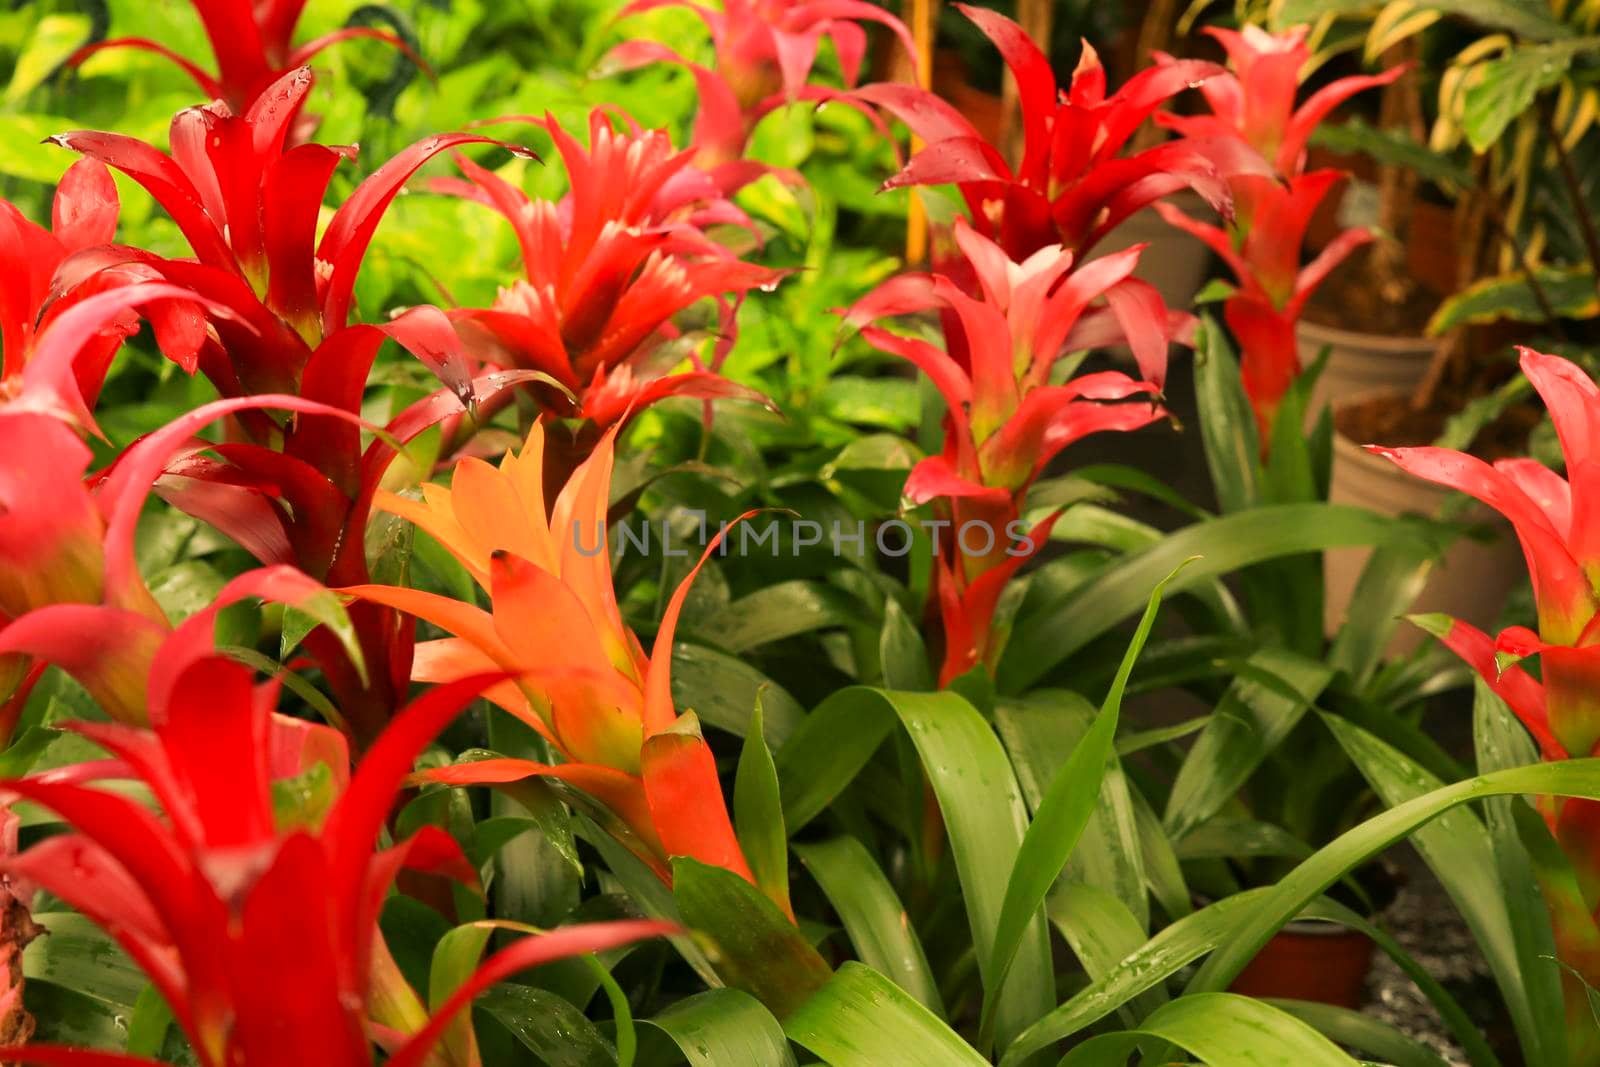 Colorful and beautiful Guzmania Monostachia Rusby plants in the garden